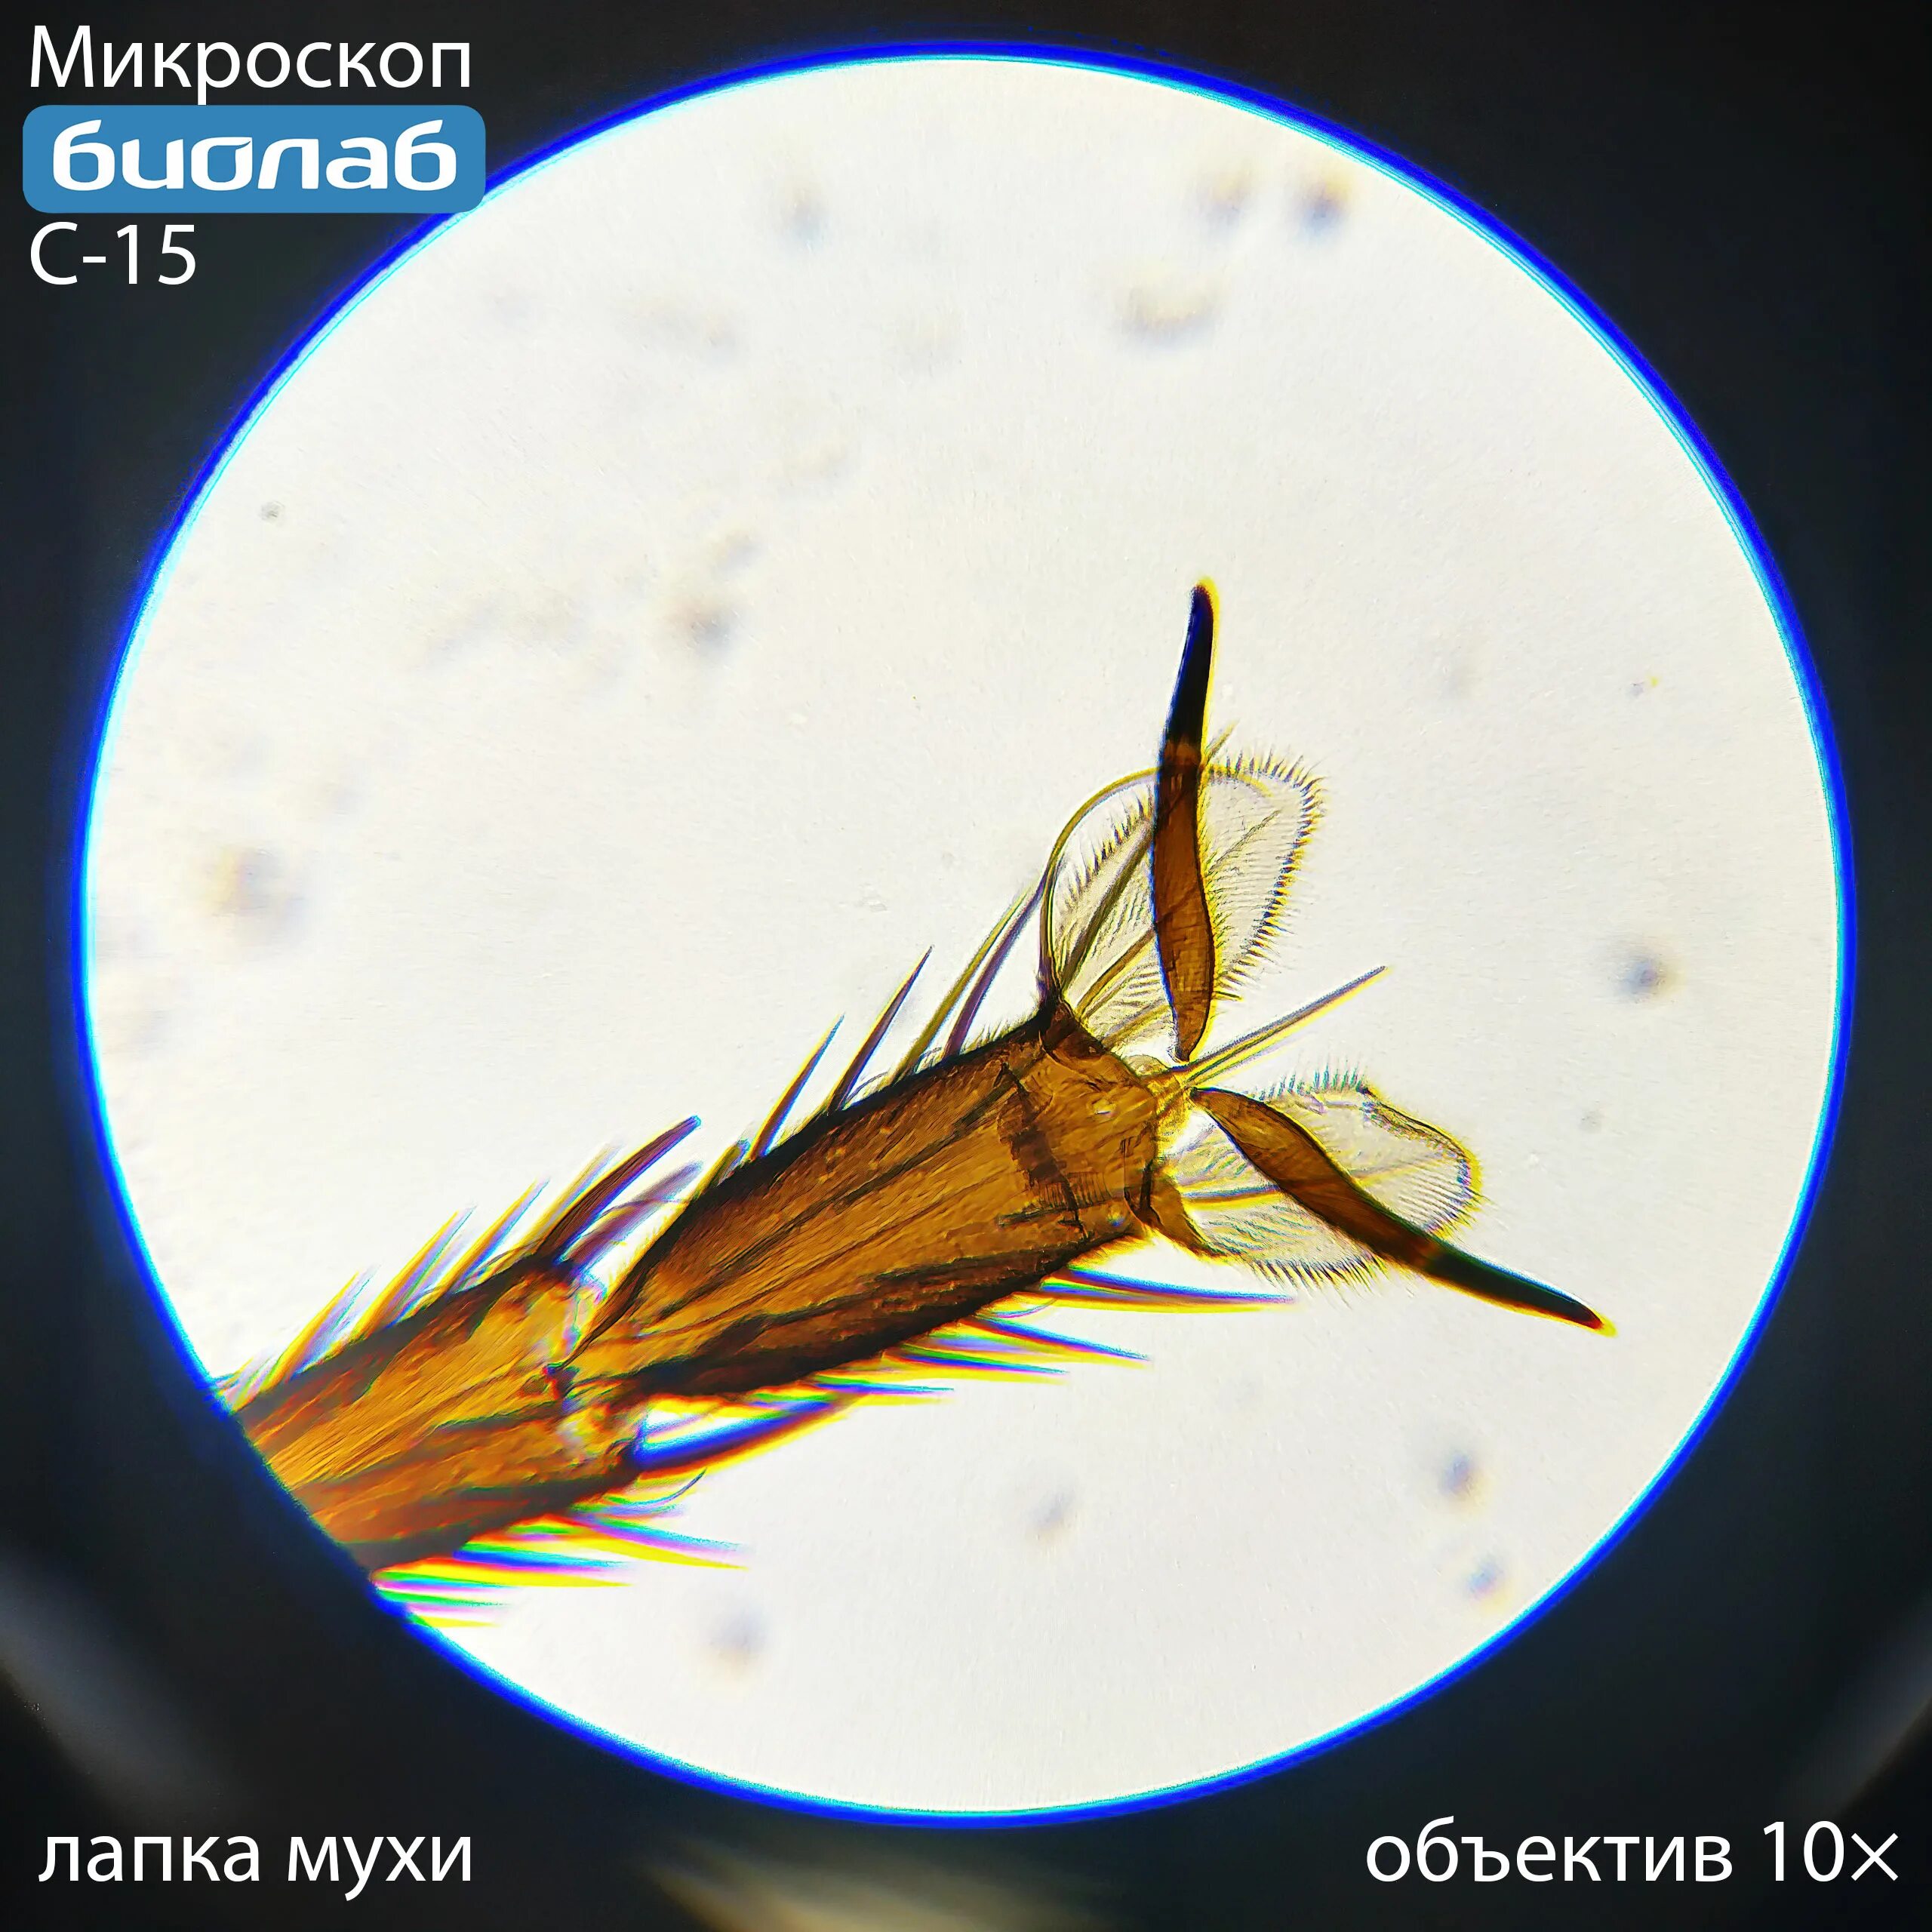 Лапки микроскопа. Объектив 2х для микроскопа БИОЛАБ. Лапка мухи под микроскопом. Лапы мухи под микроскопом. Мушка в микроскоп.